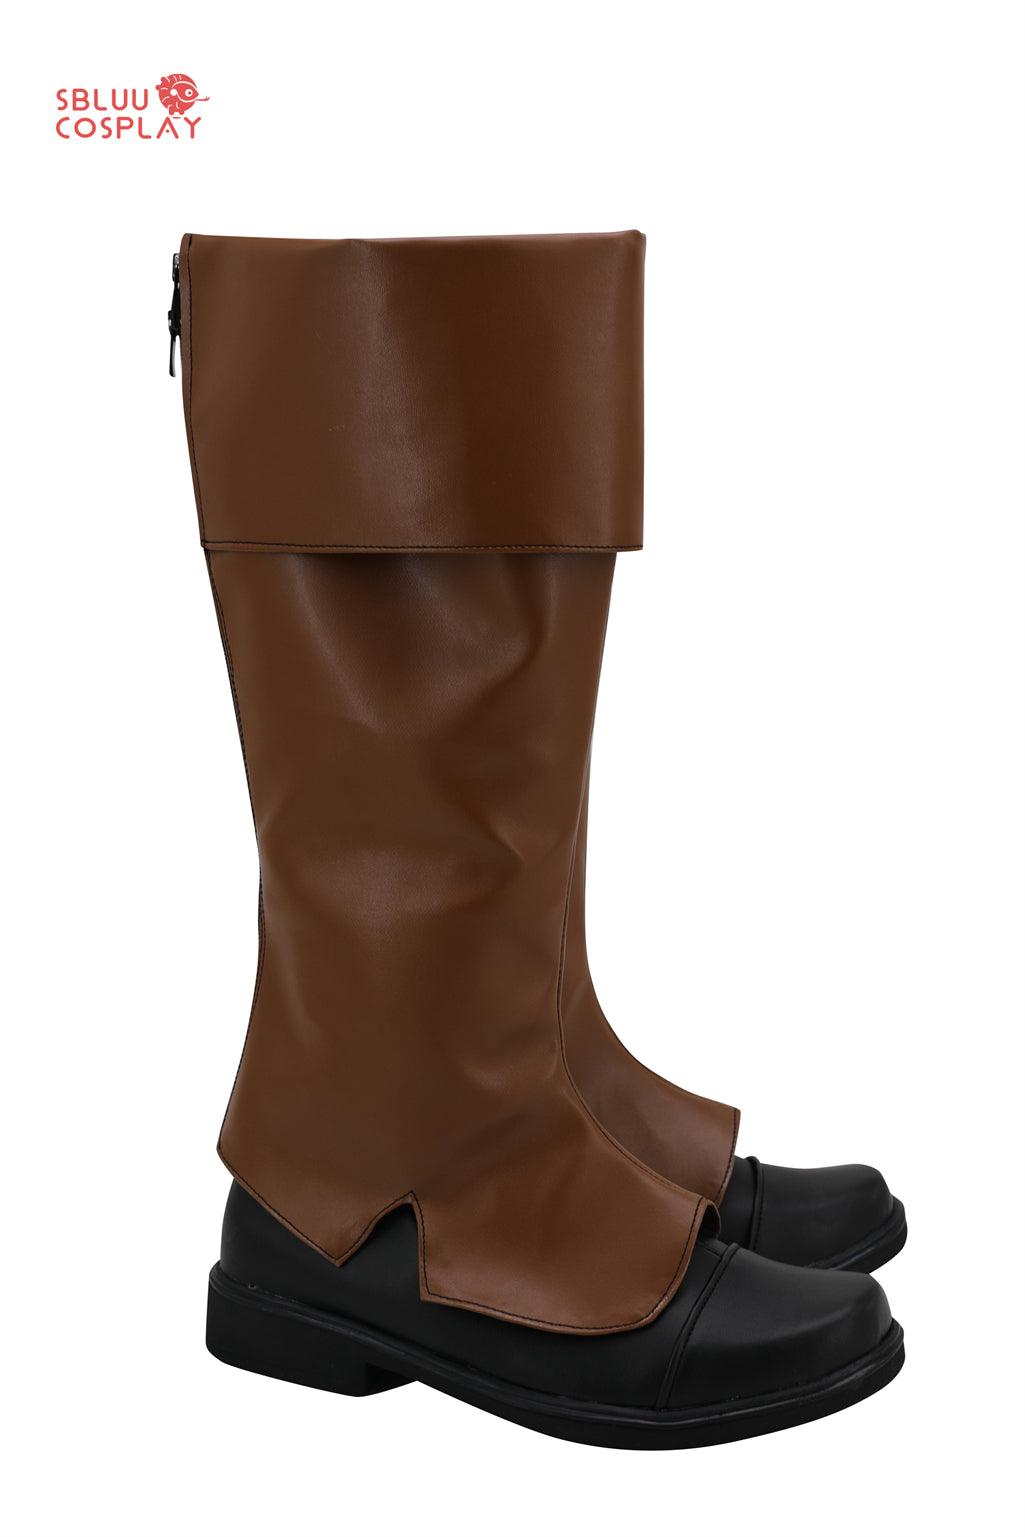 Assassin's Creed Arno Victor Dorian Cosplay Shoes Custom Made Boots - SBluuCosplay